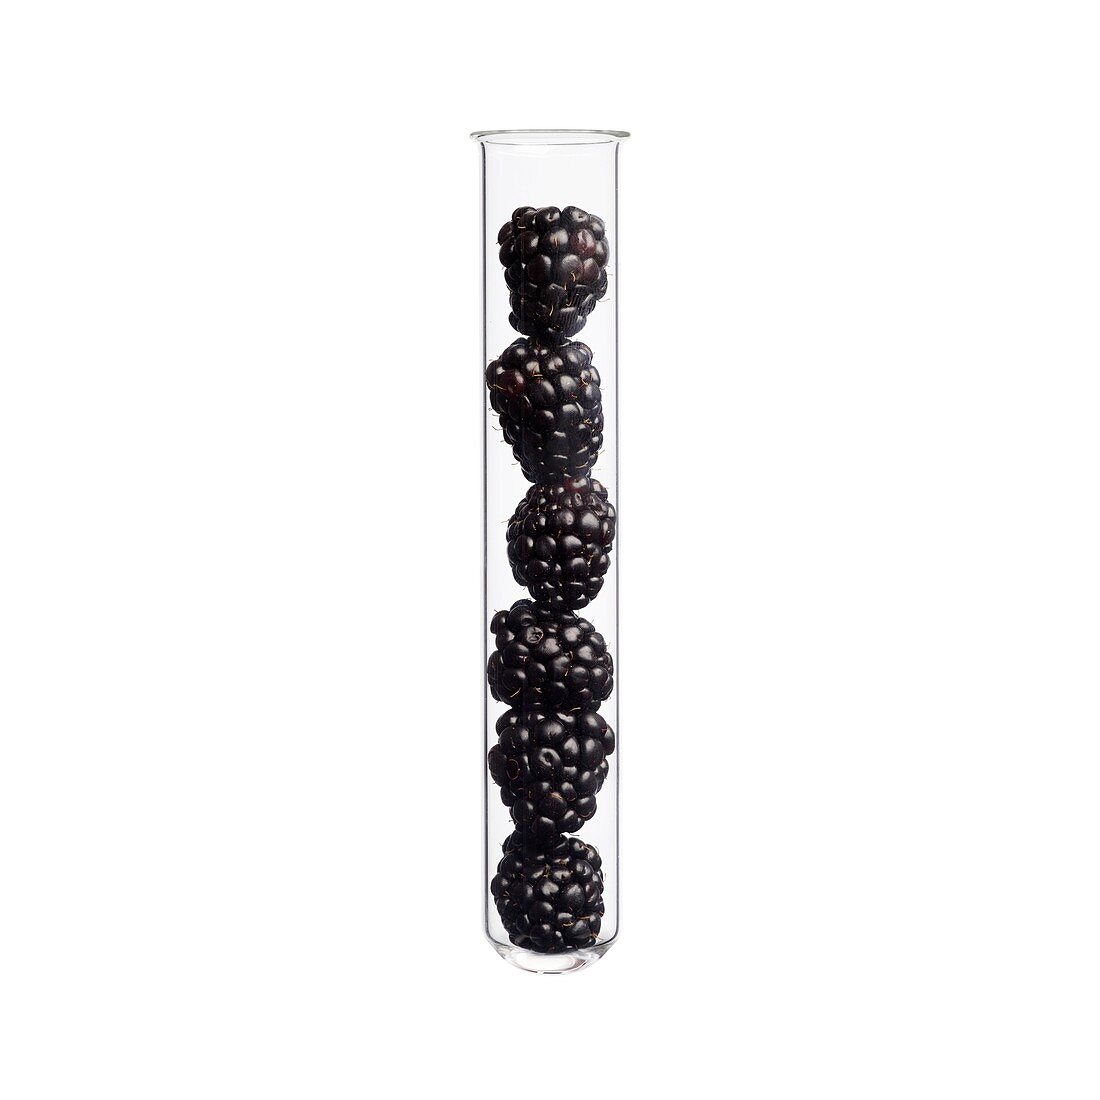 Blackberries in test tube